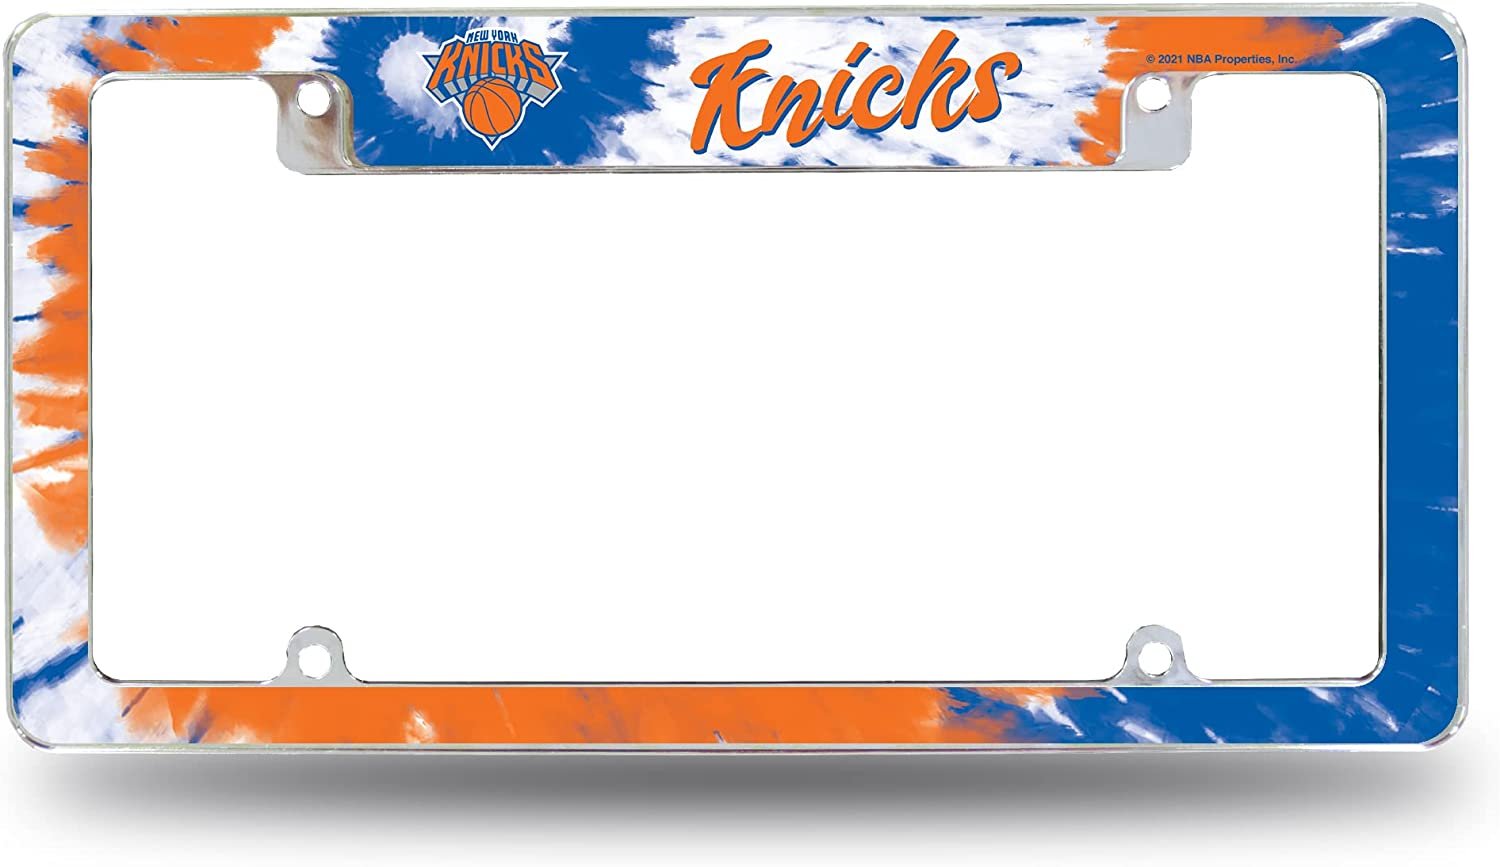 New York Knicks Metal License Plate Frame Chrome Tag Cover Tie Dye Design 6x12 Inch